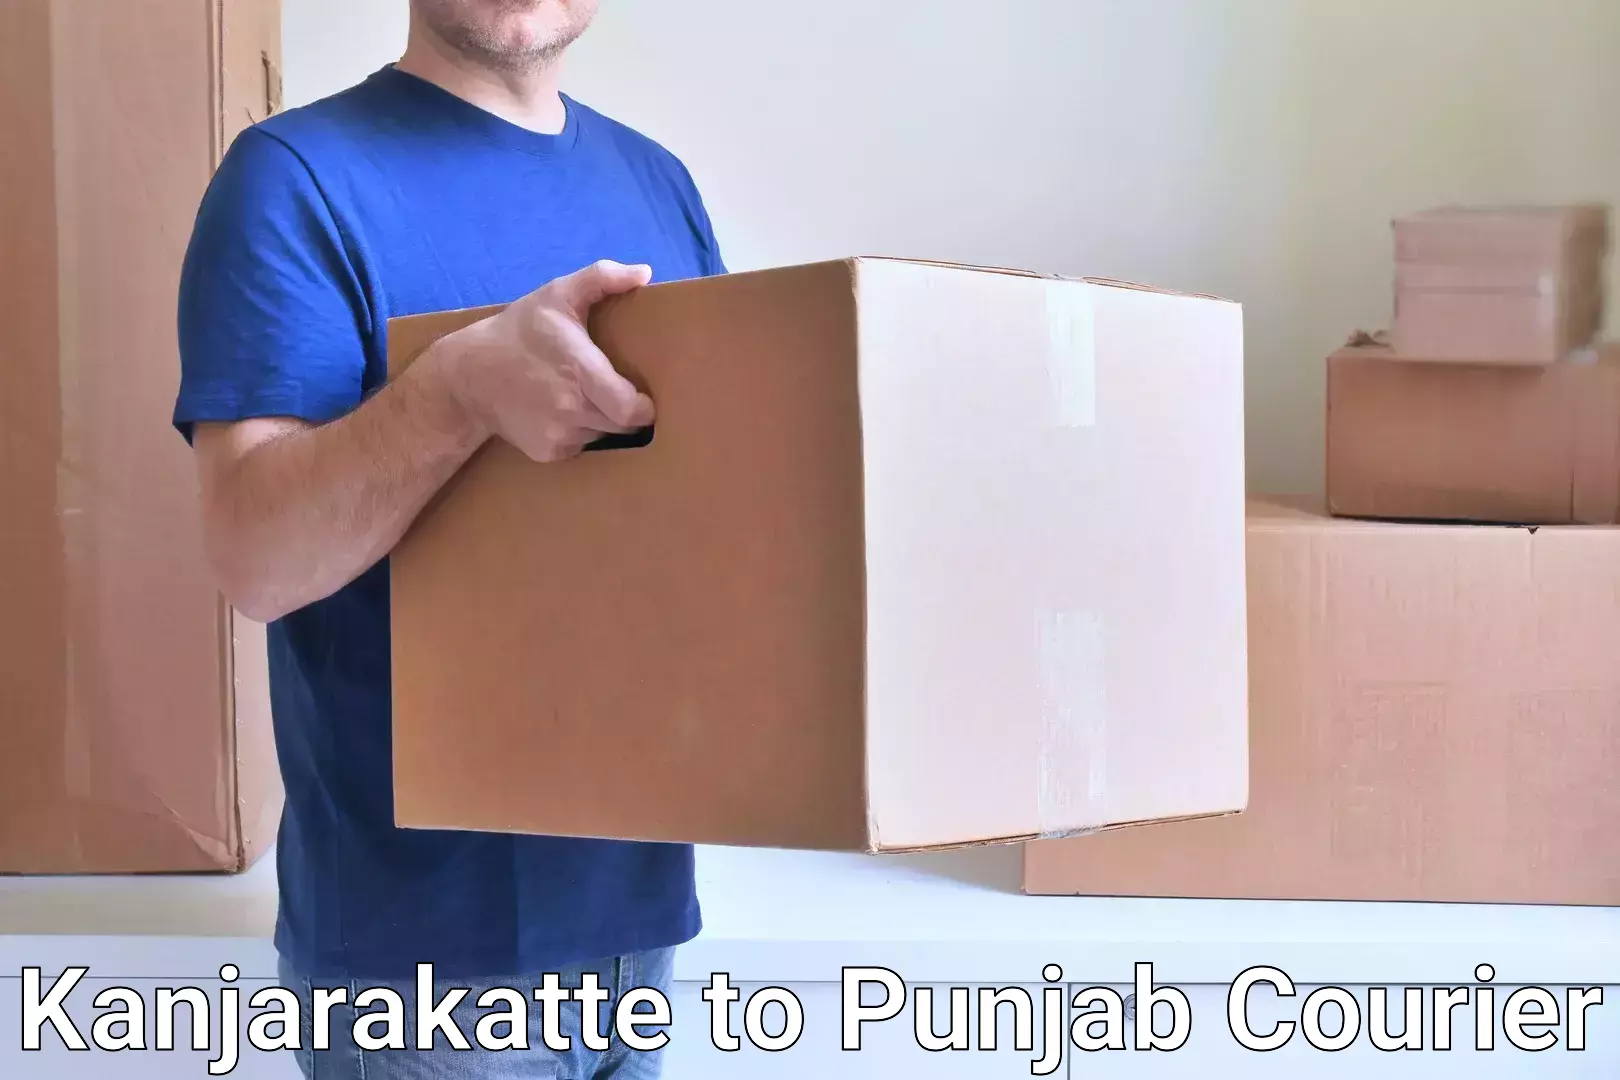 Courier service comparison Kanjarakatte to Punjab